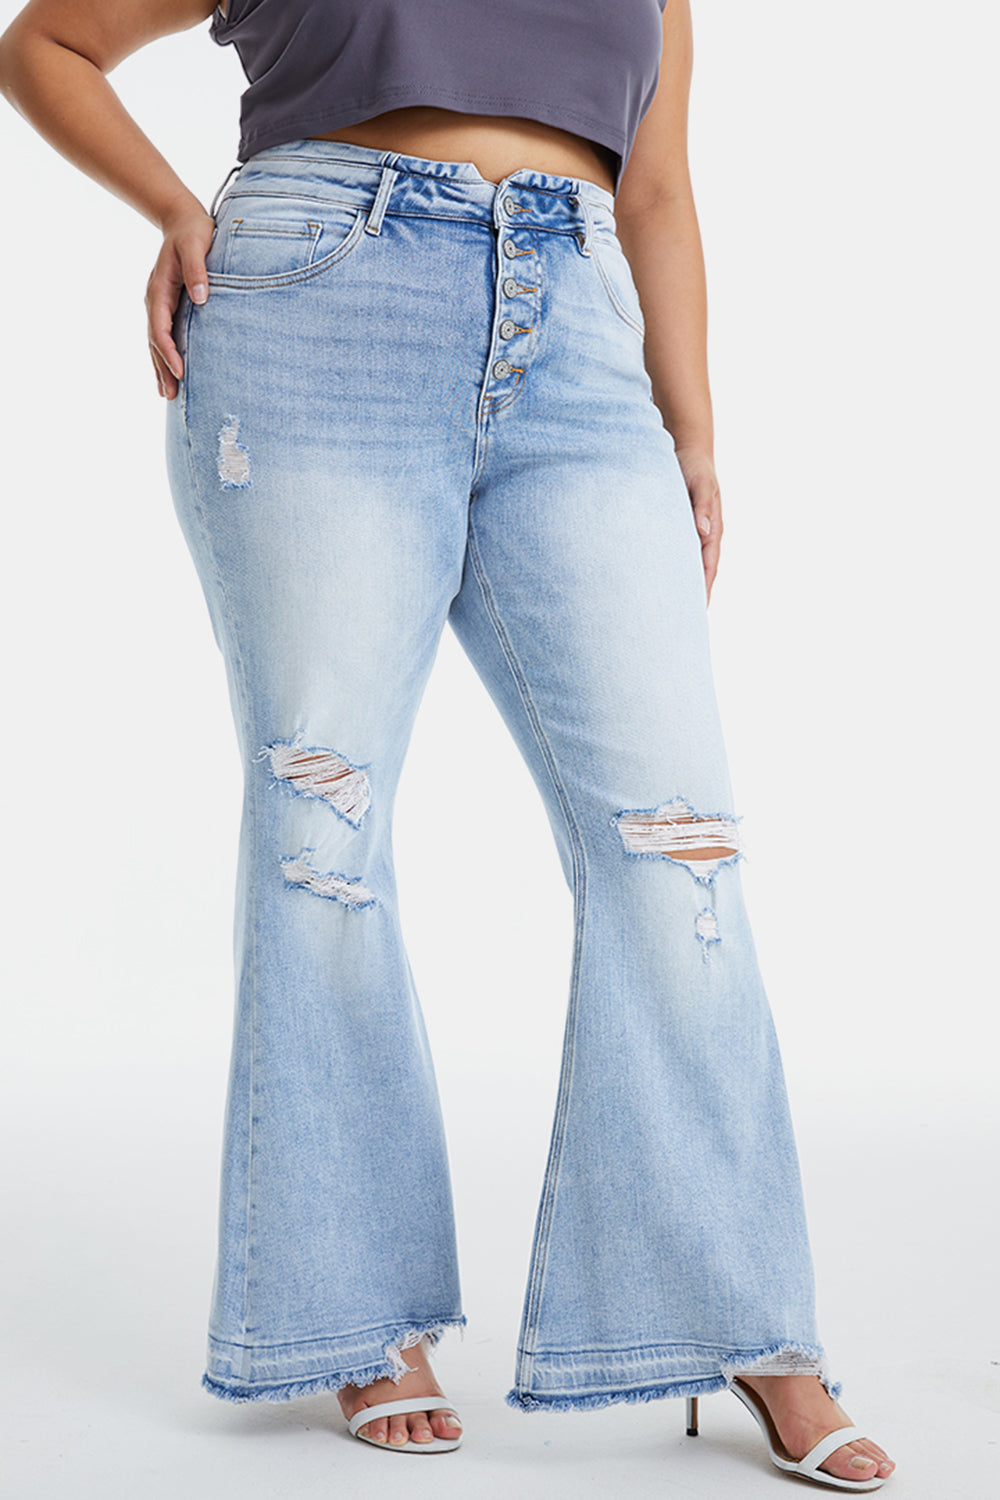 Hemline Havoc Flair Jeans